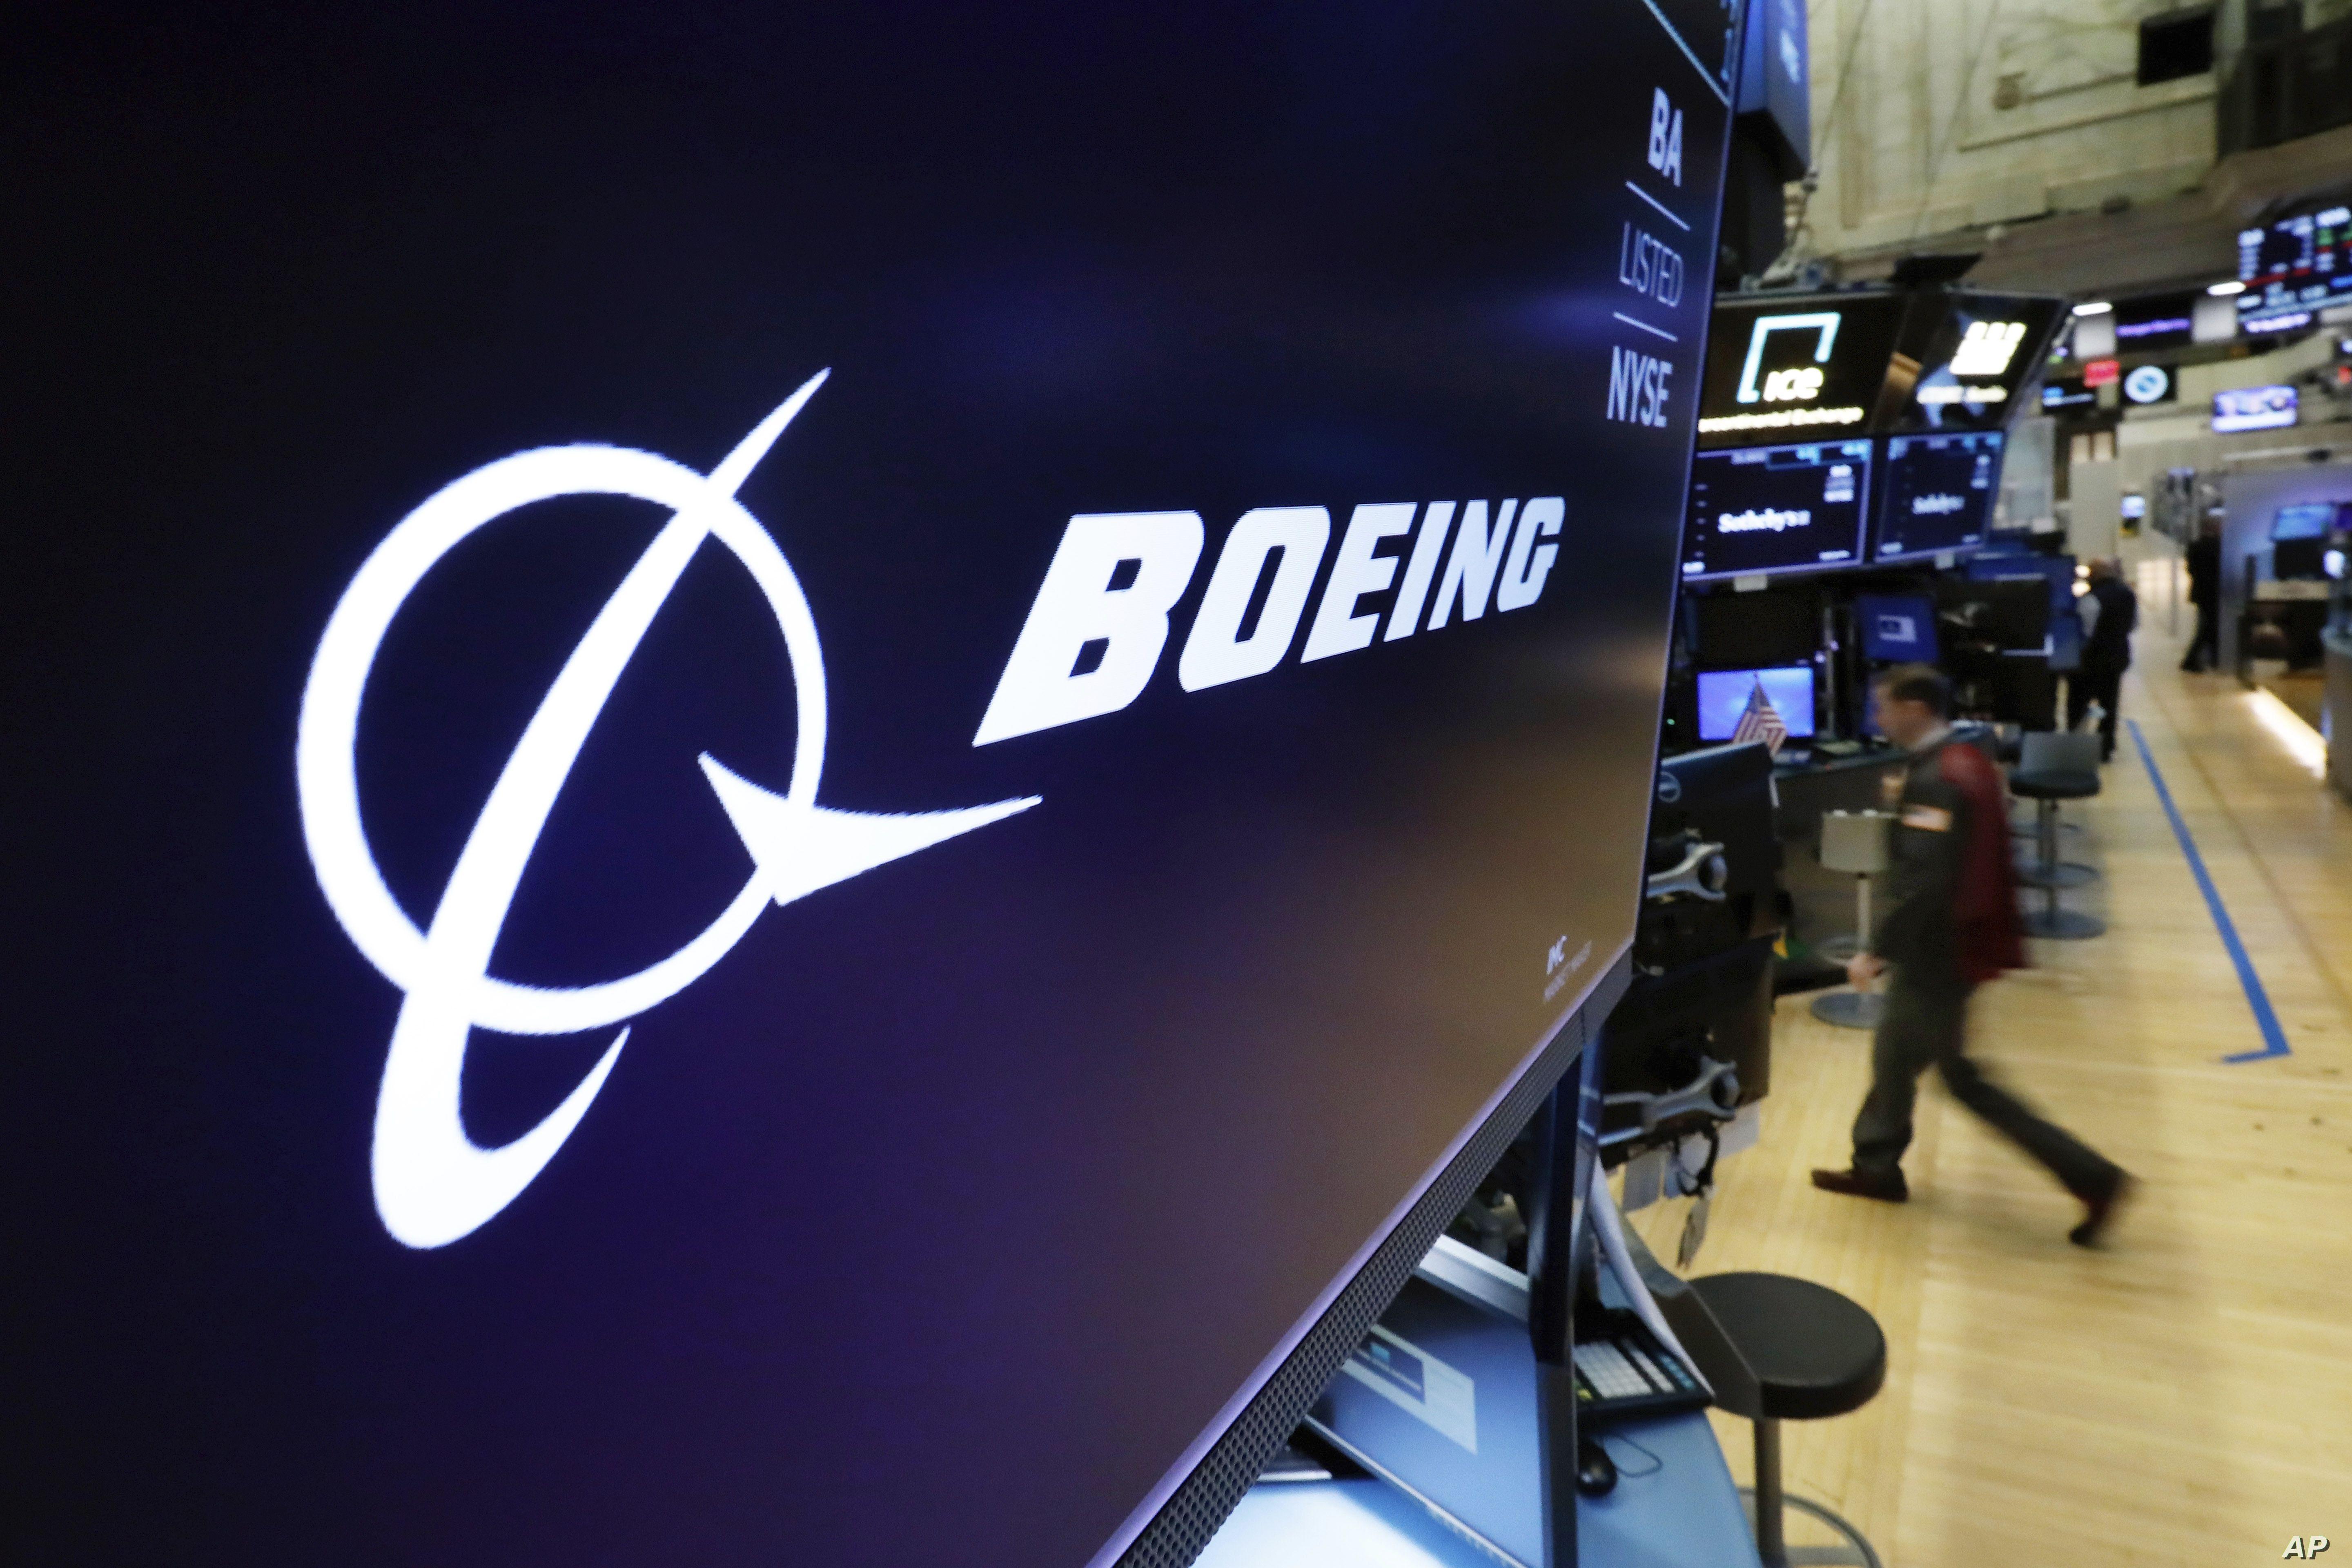 Boeing's Logo - Boeing Shares Plunge After Ethiopian Airlines Crash